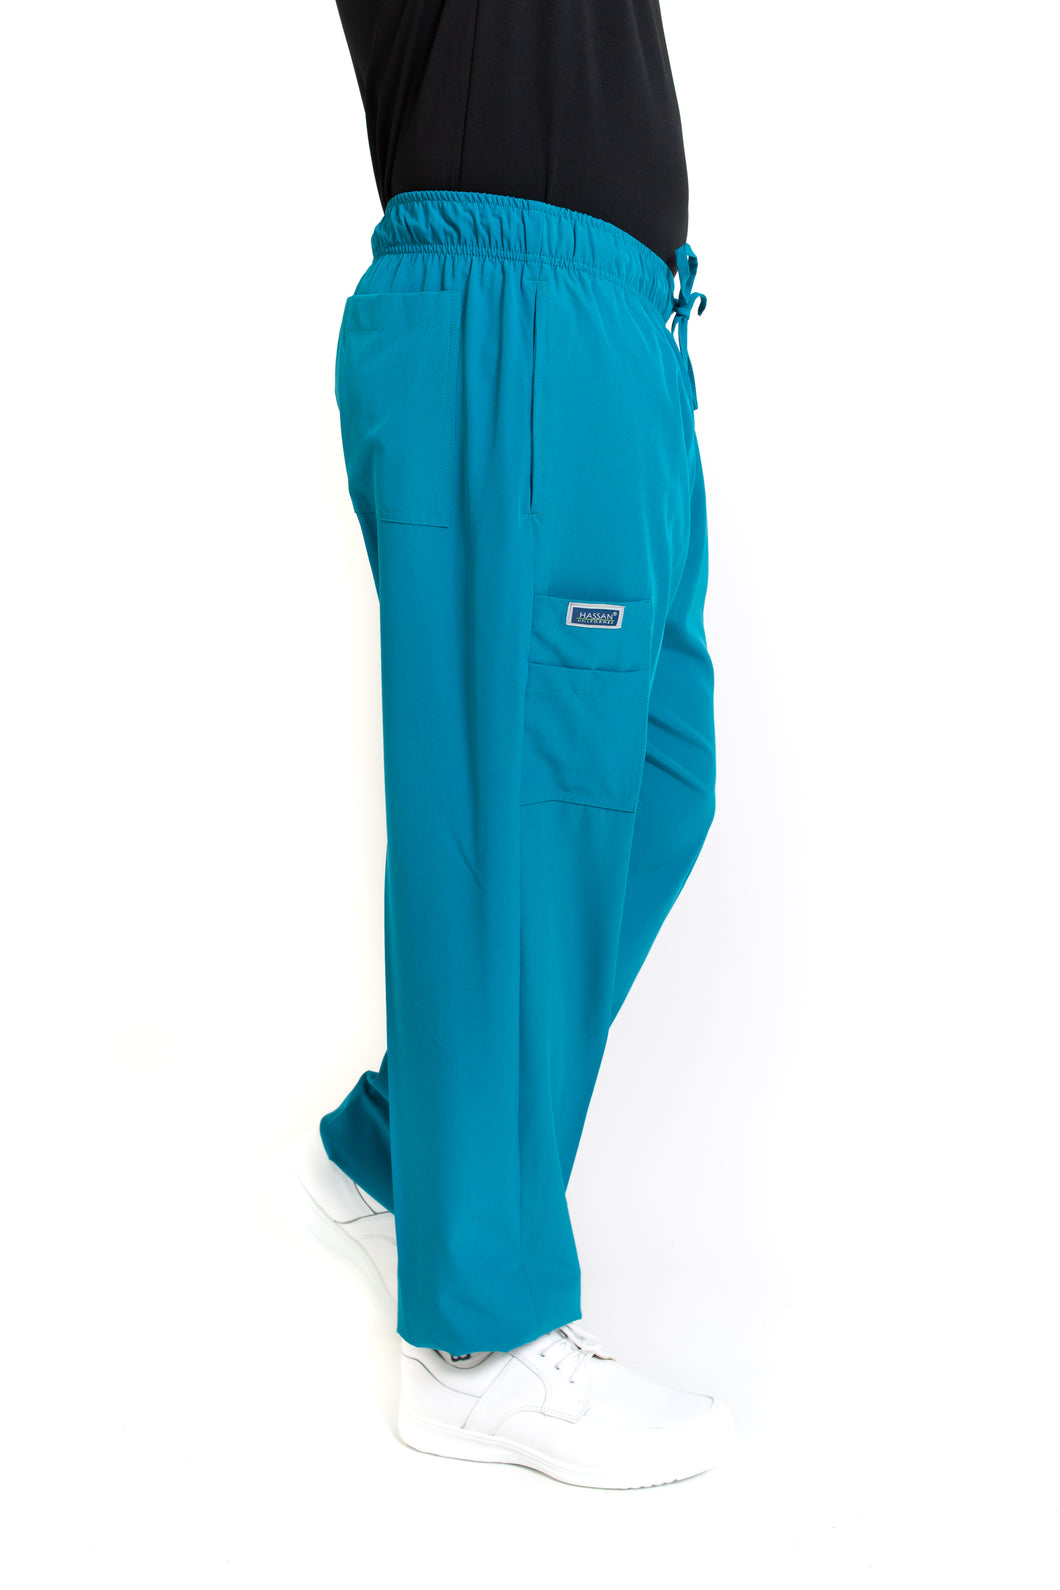 Pantalón Pant EA-02P REPELENTE A FLUIDOS-Color VERDE HOMBRE-HASSAN Uniformes